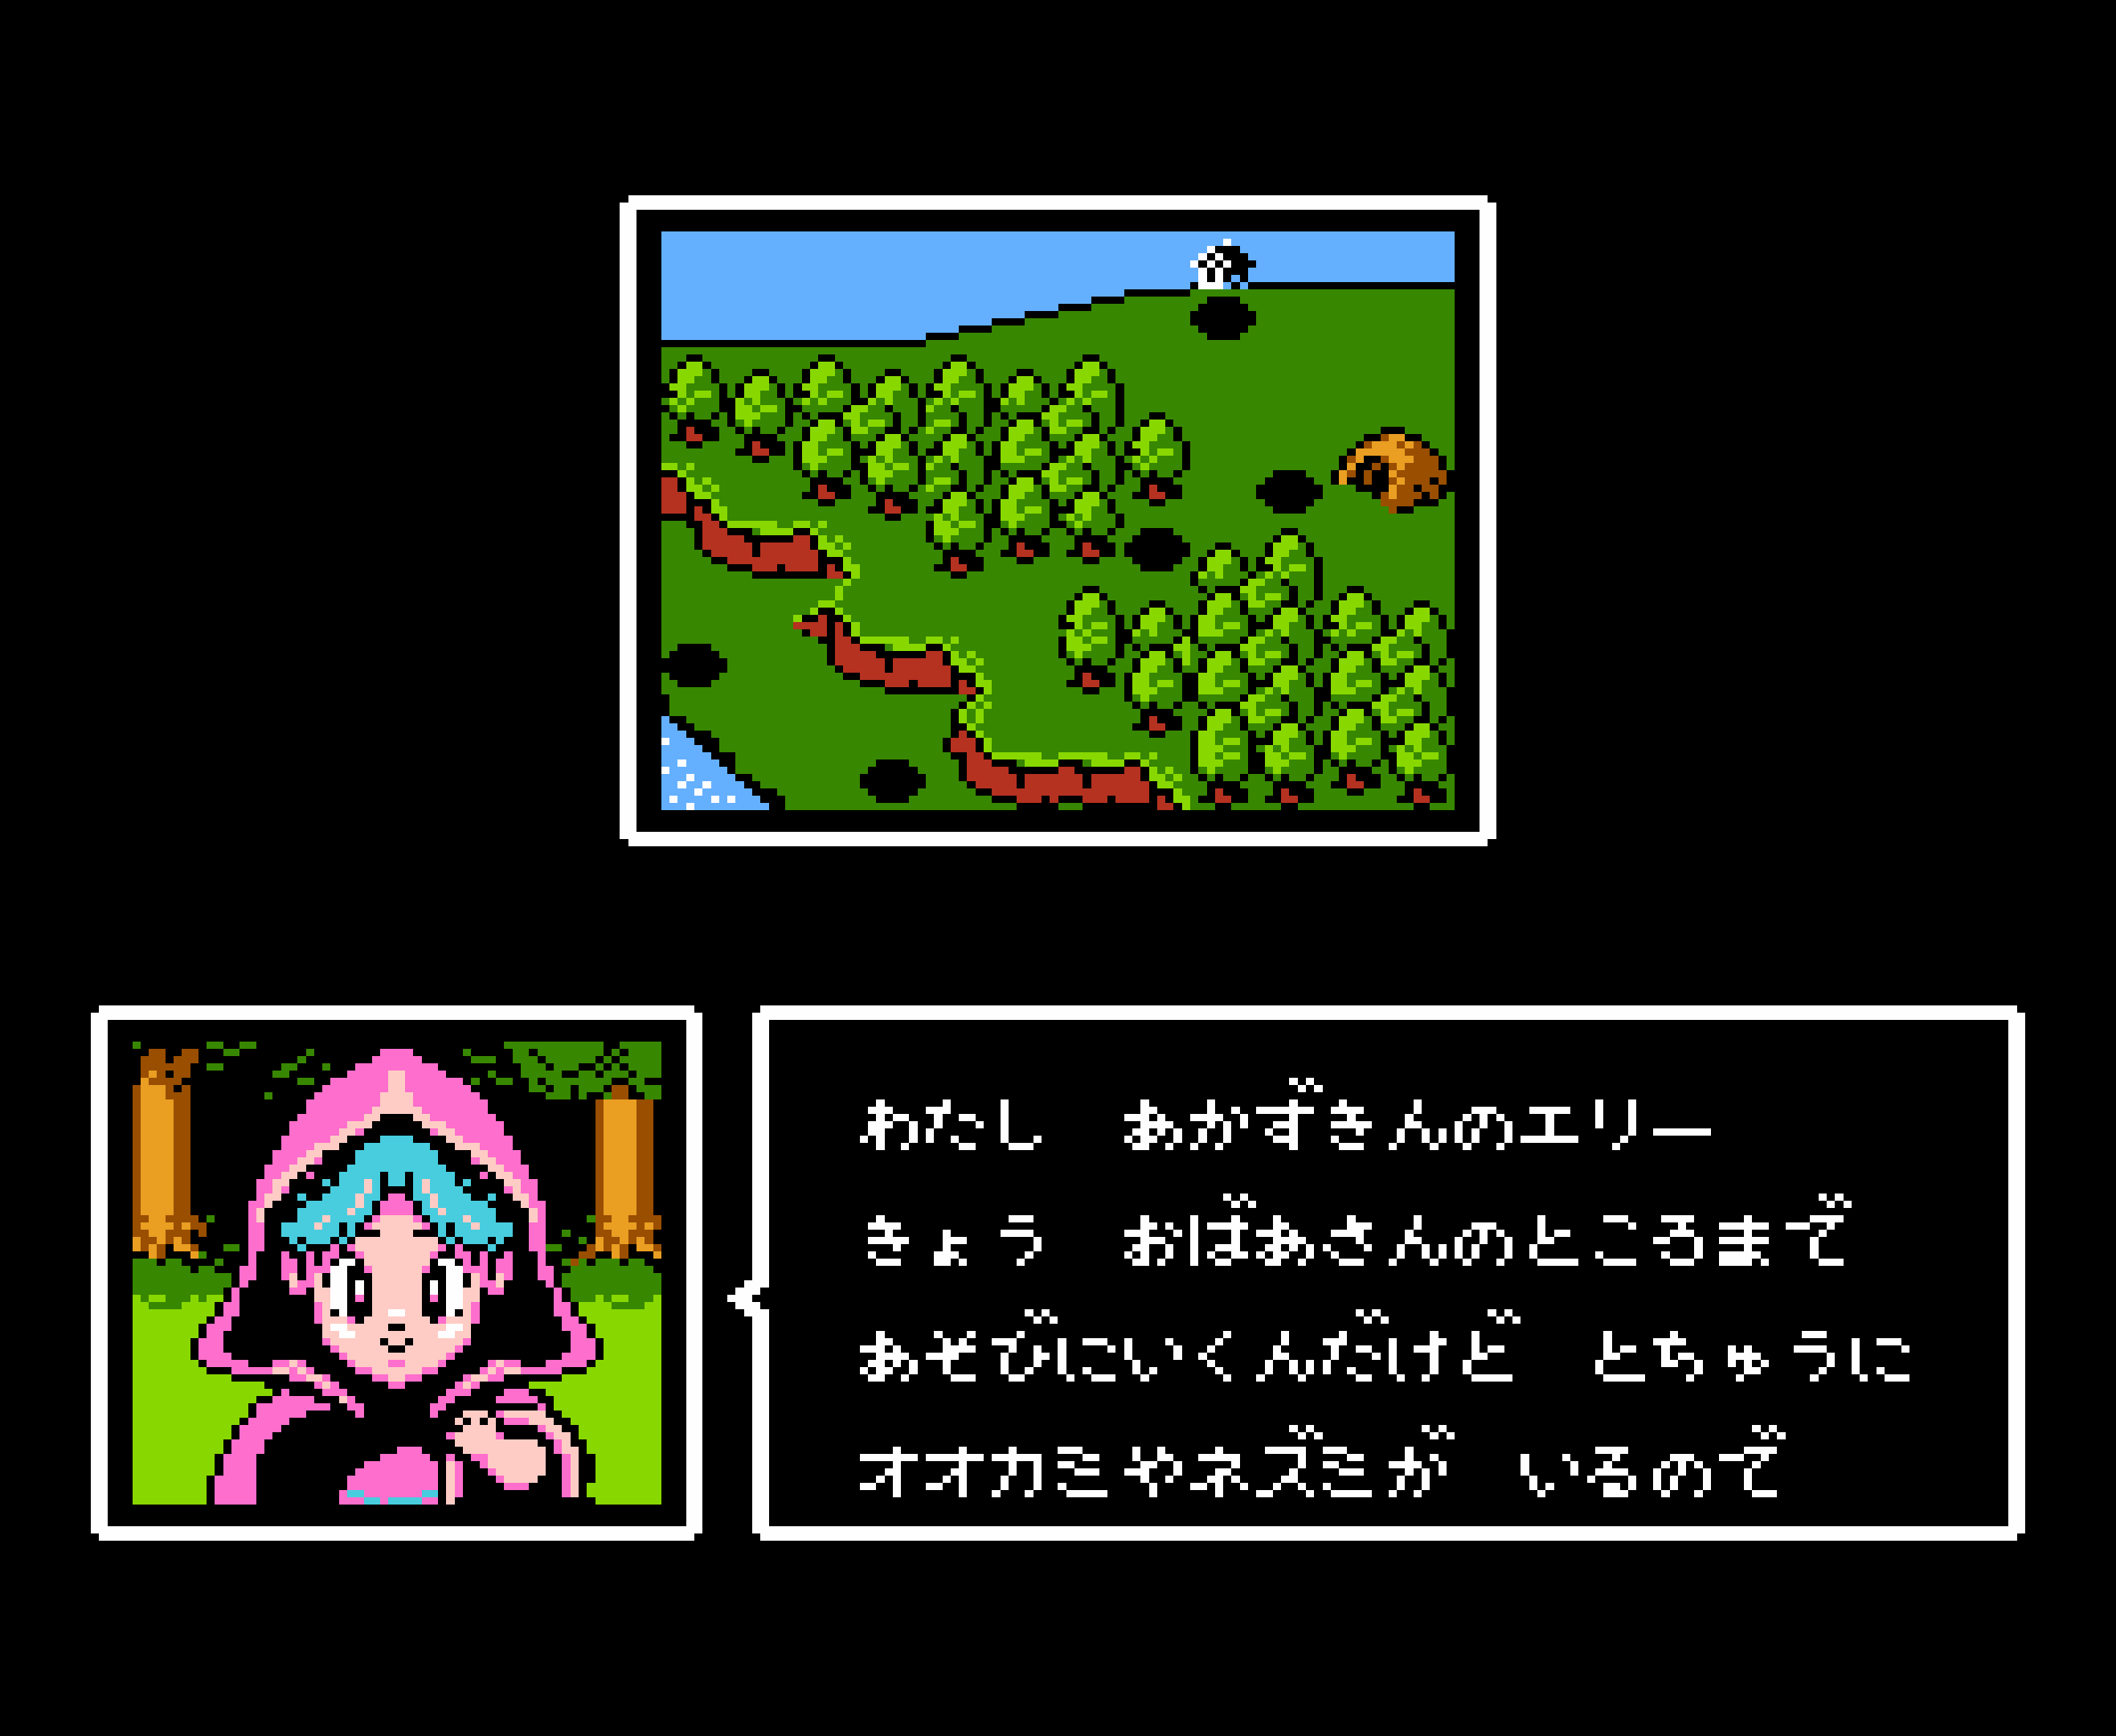 Rampart Famicom Story dialogue